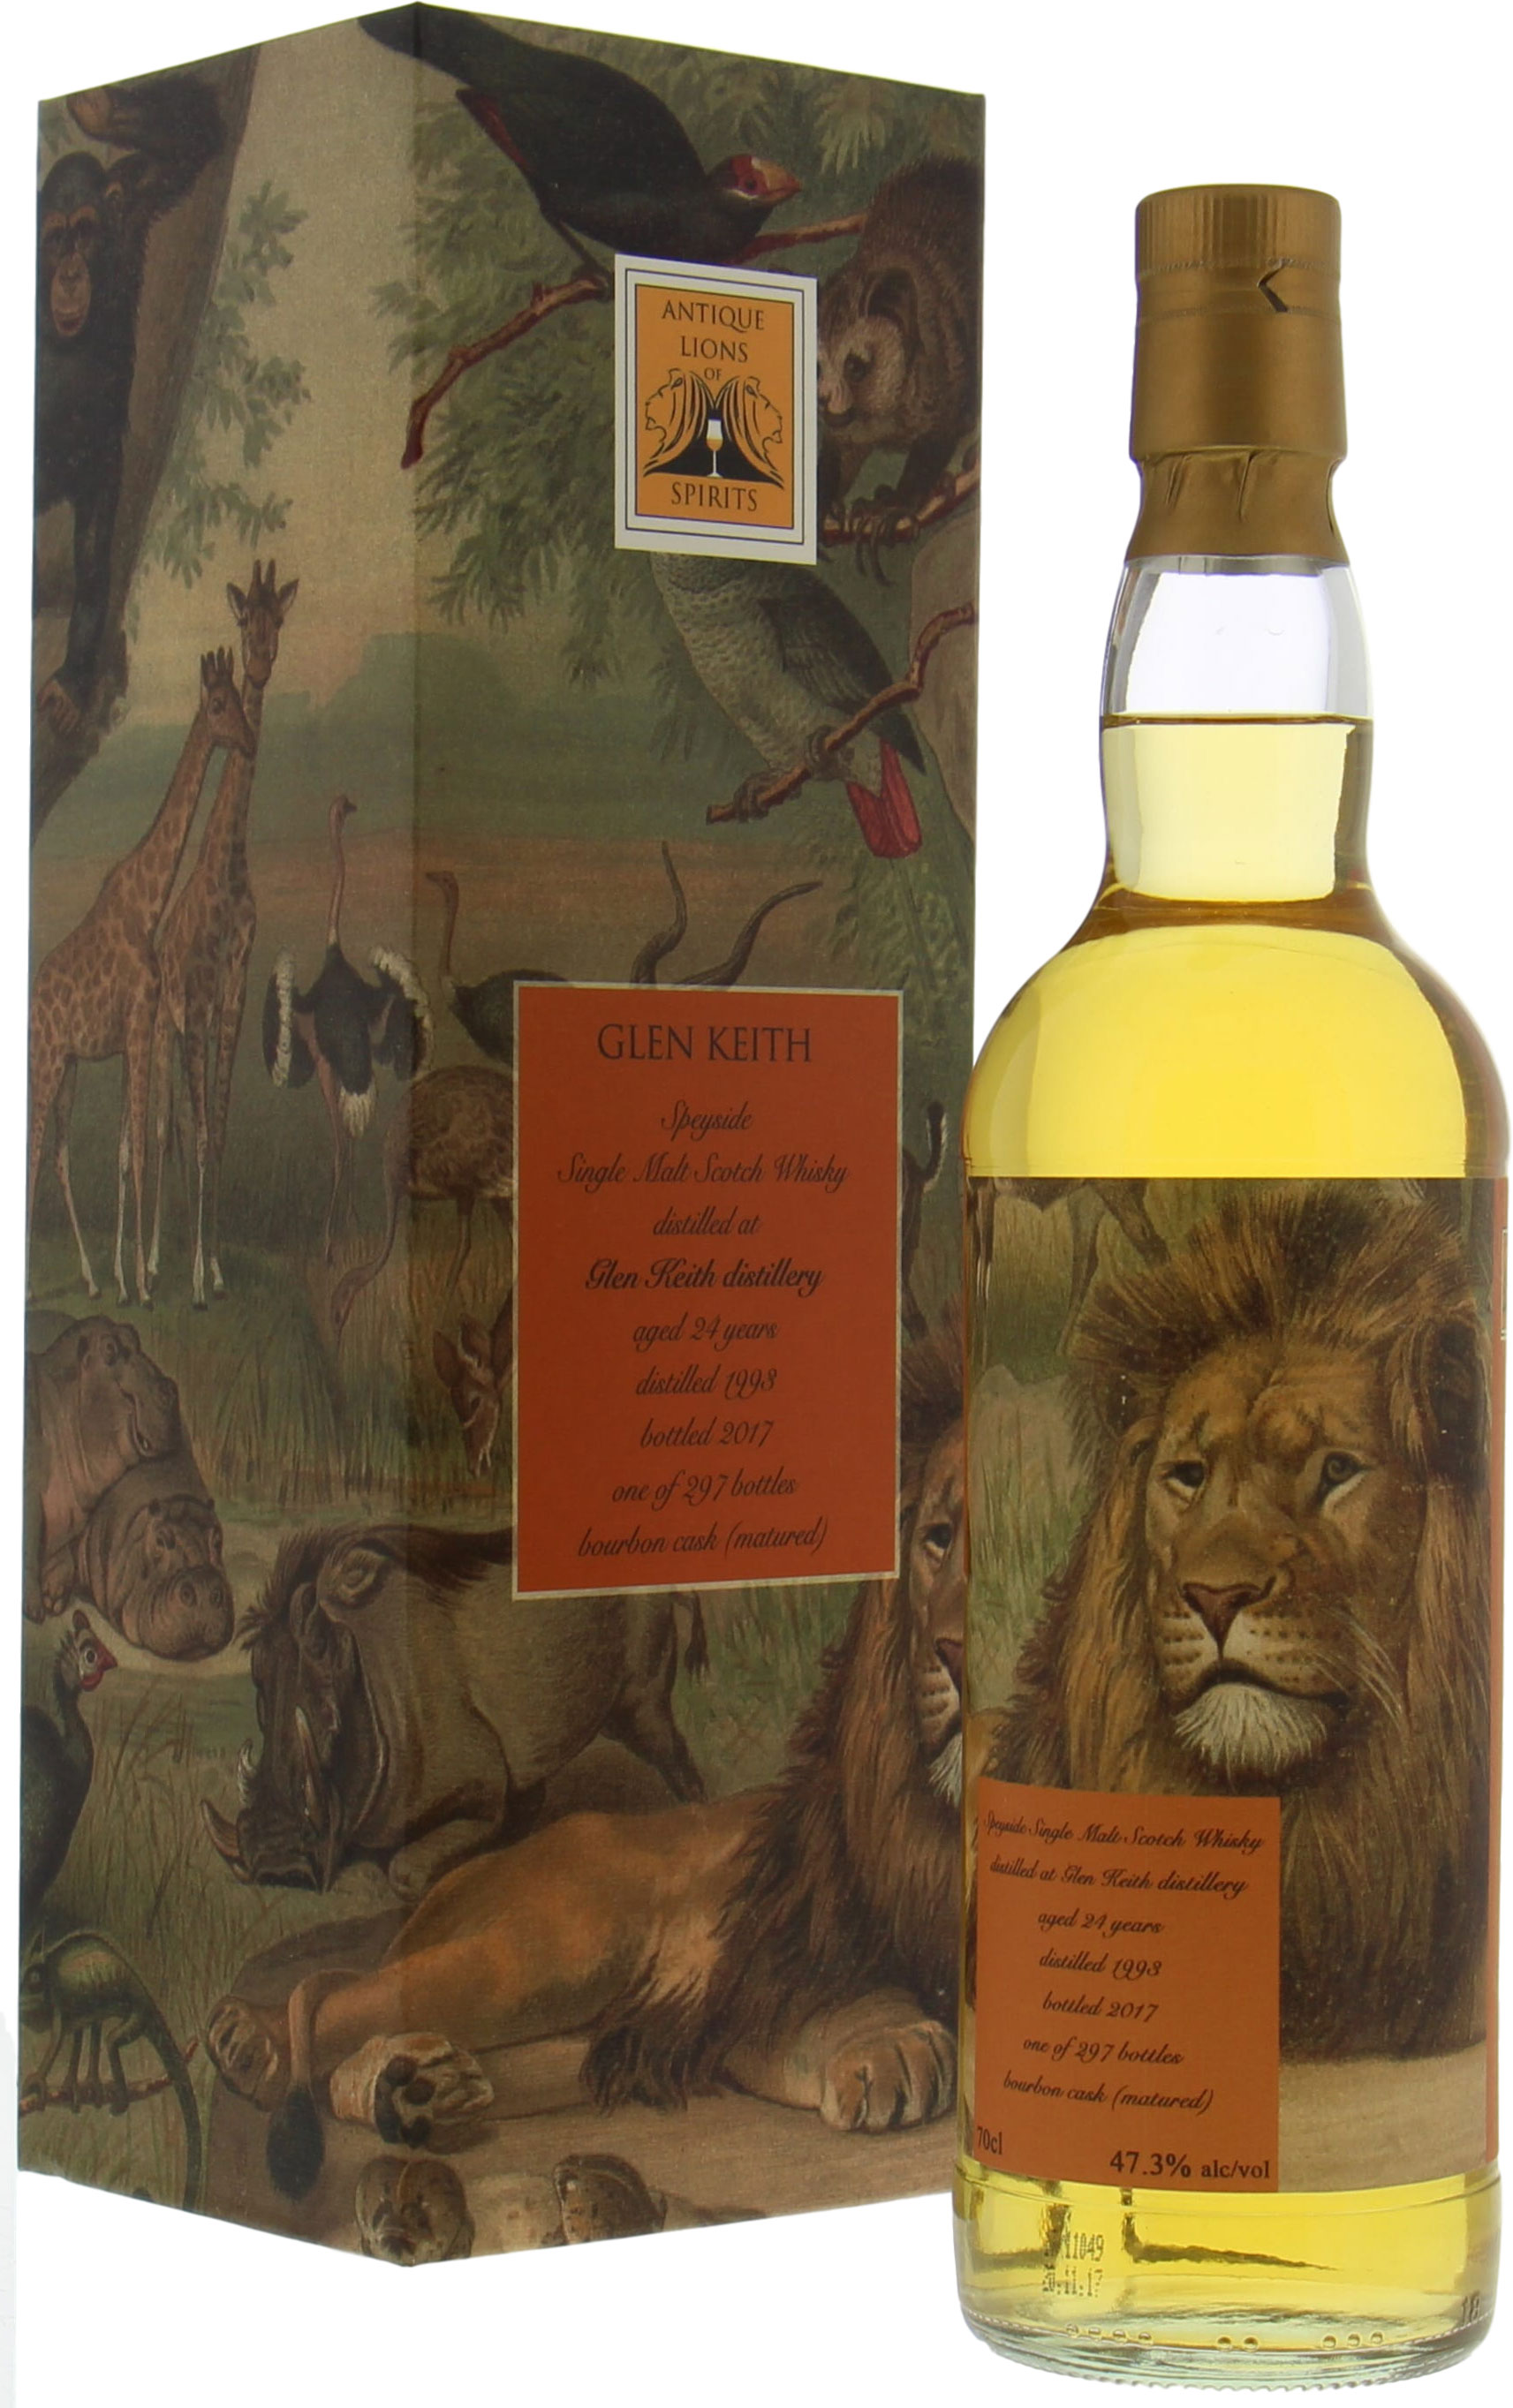 Glen Keith - 24 Years Old Antique Lions of Spirits Savannah Series 47.3% 1993